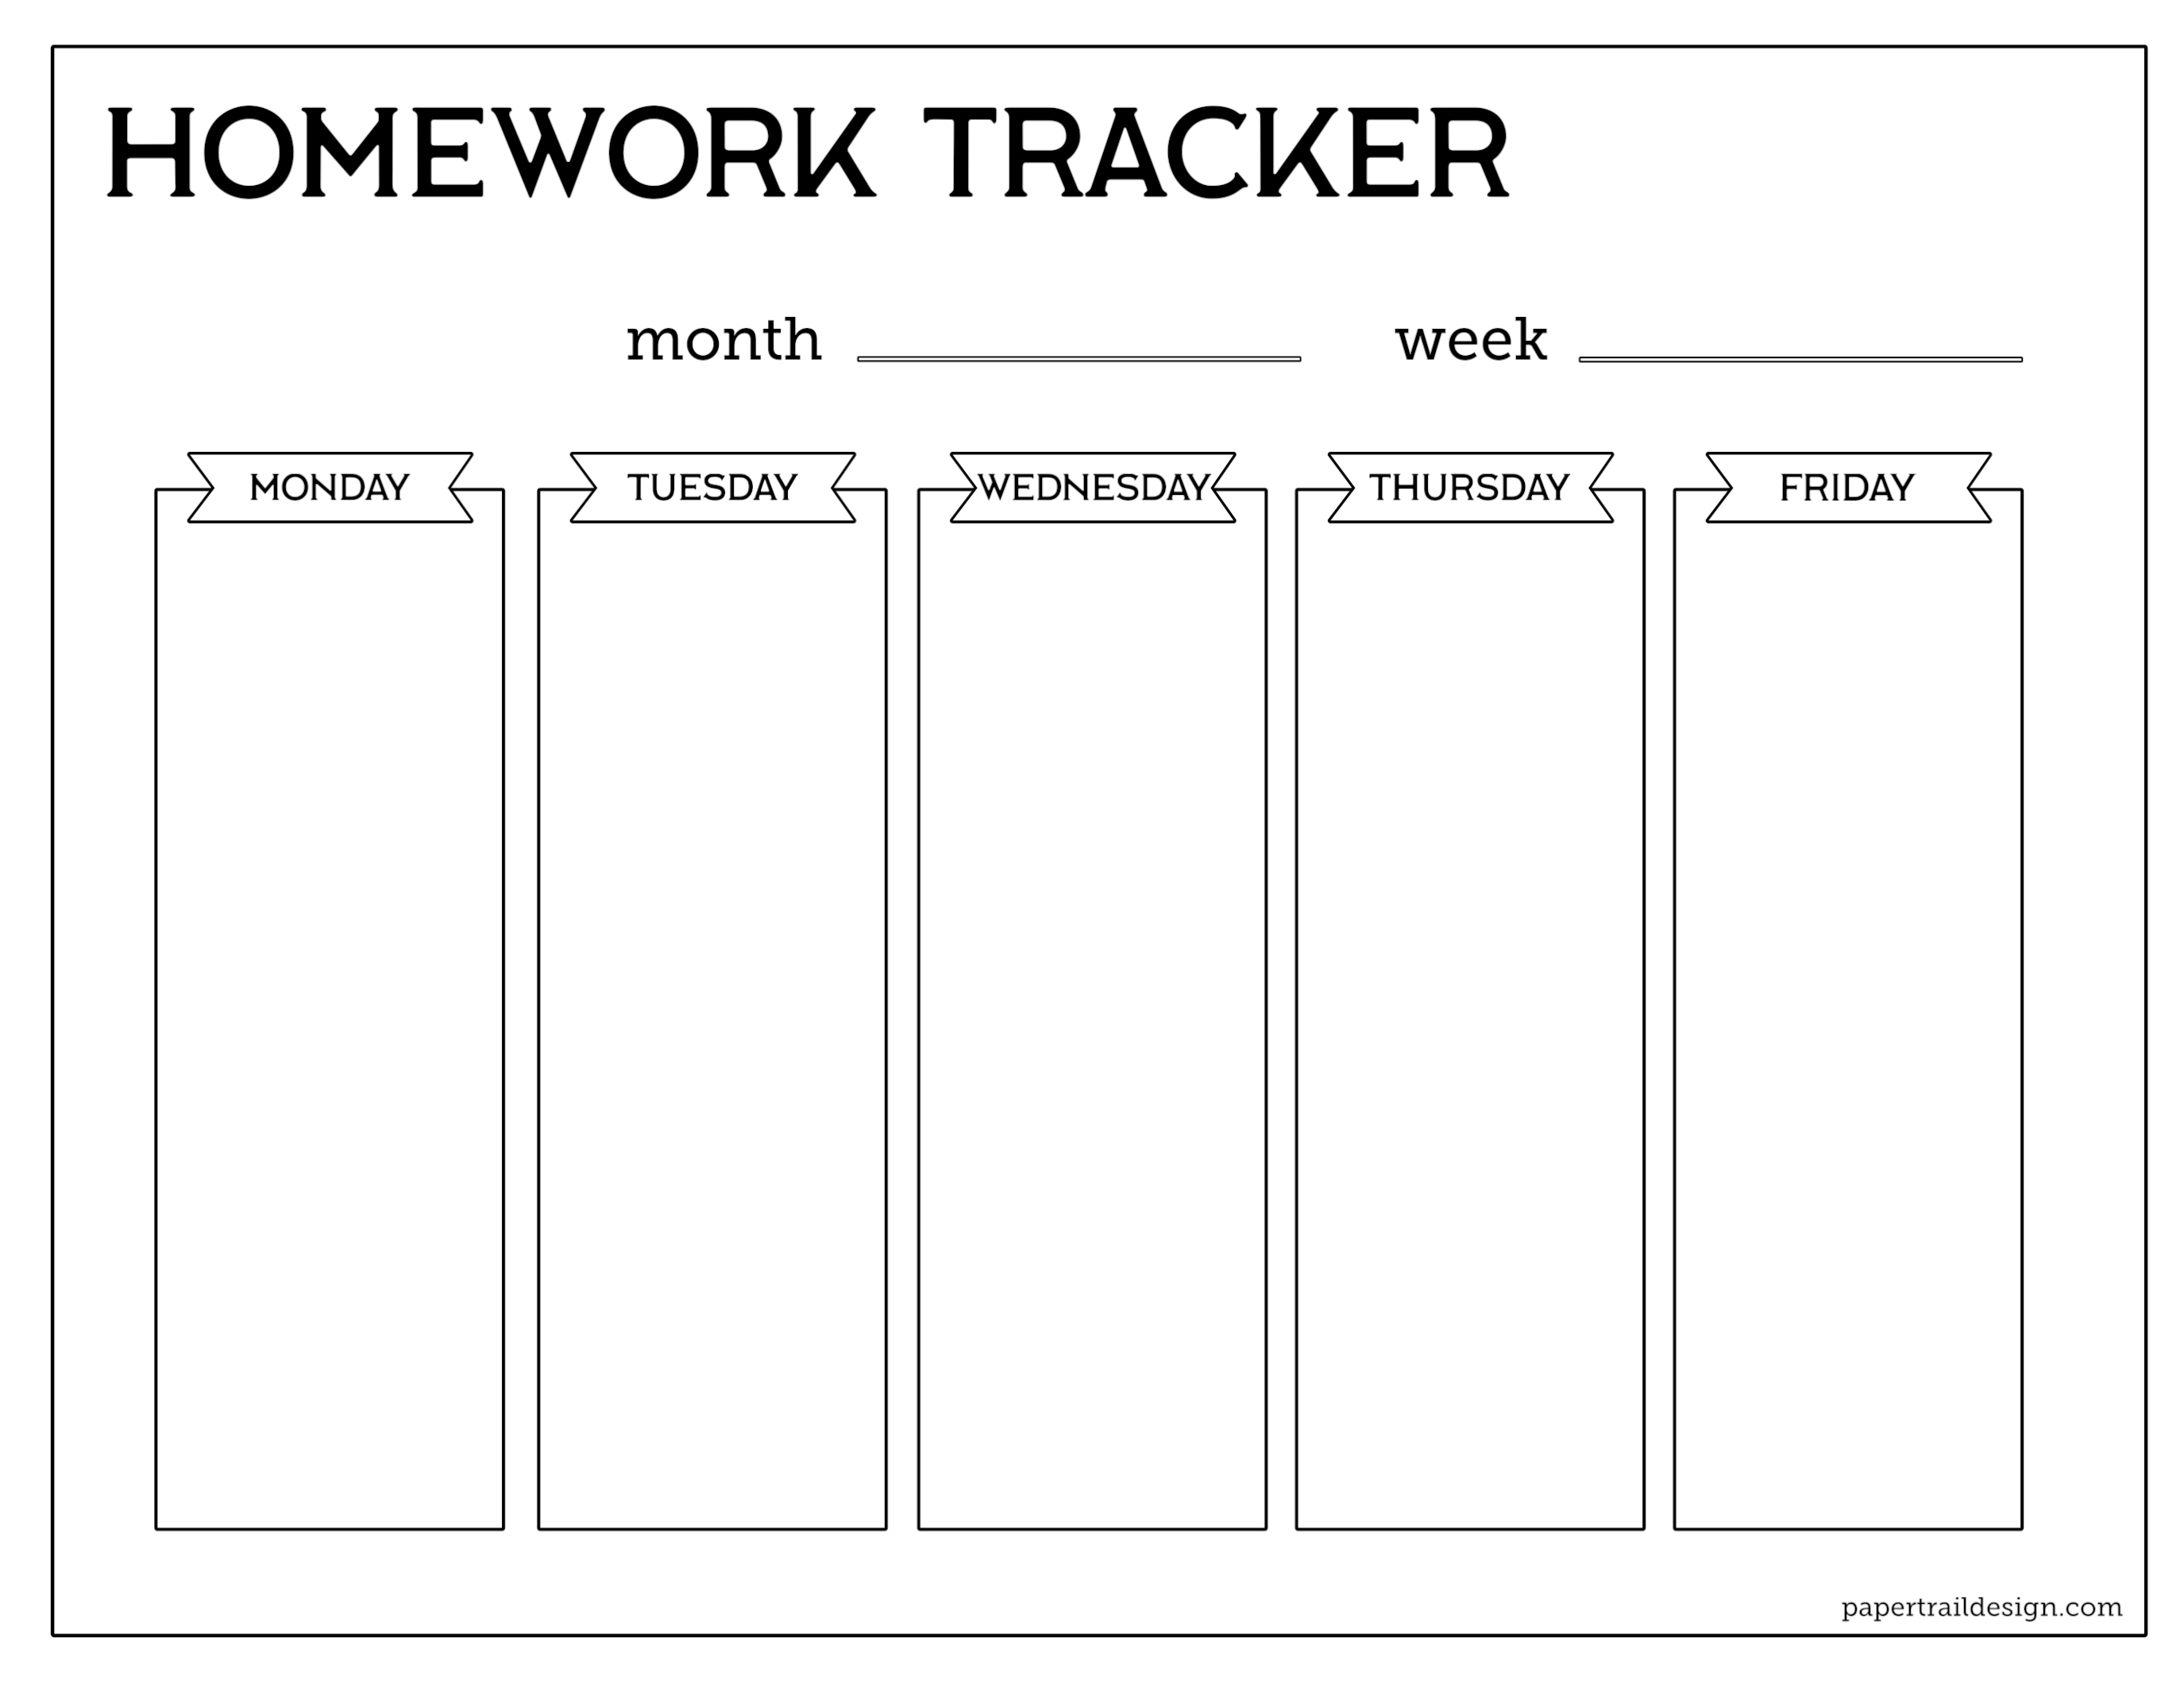 Free Printable Student Homework Planner Template - Paper